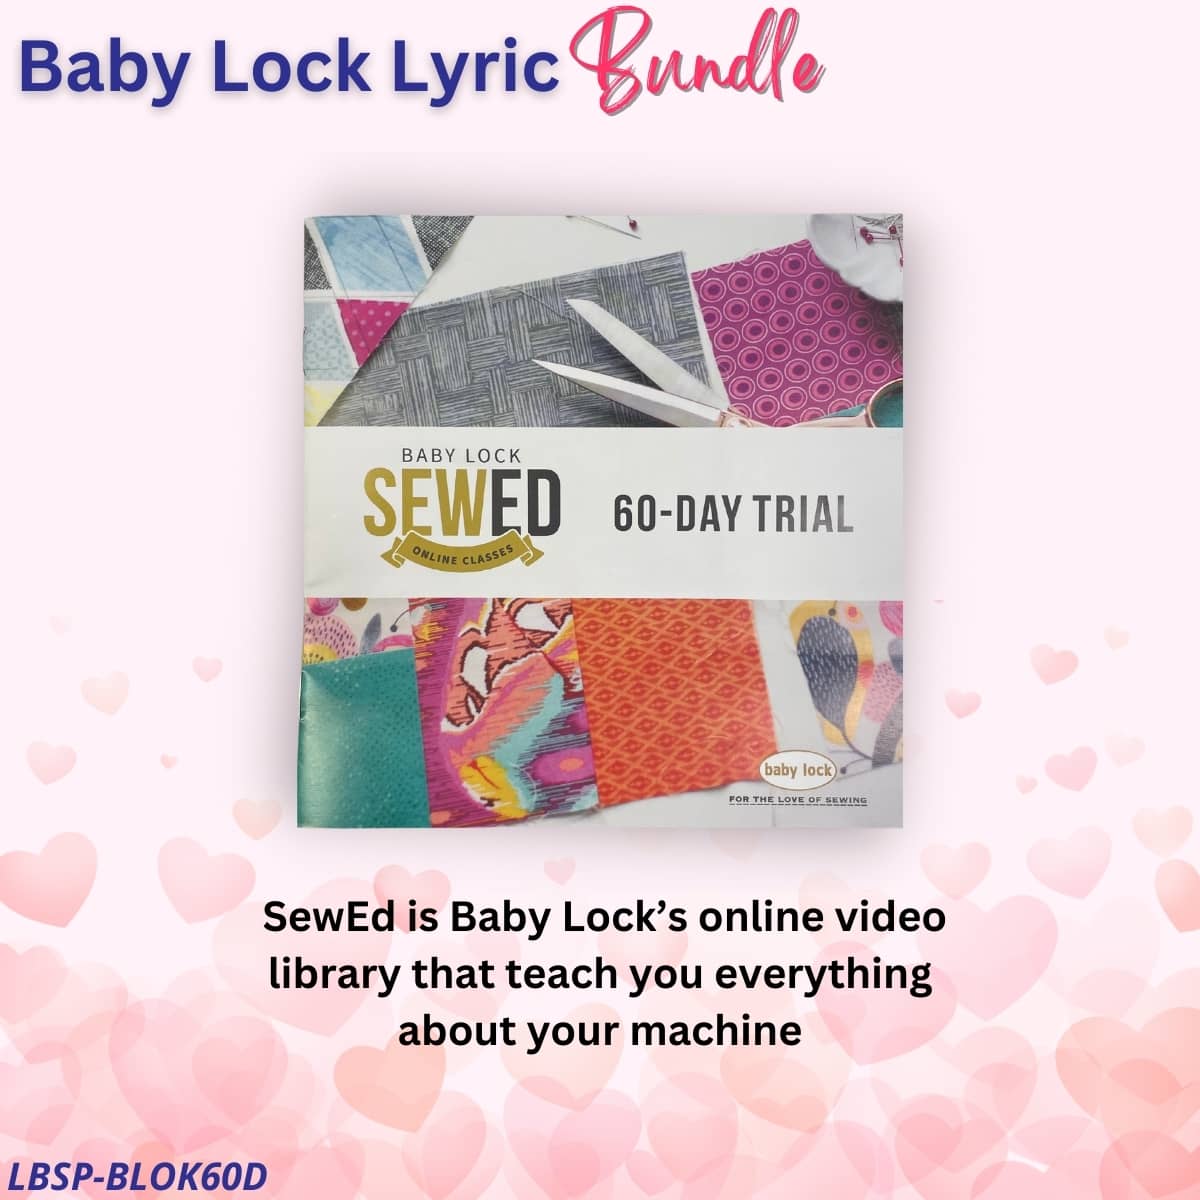 Baby Lock Lyric bundle for Valentine's Sale